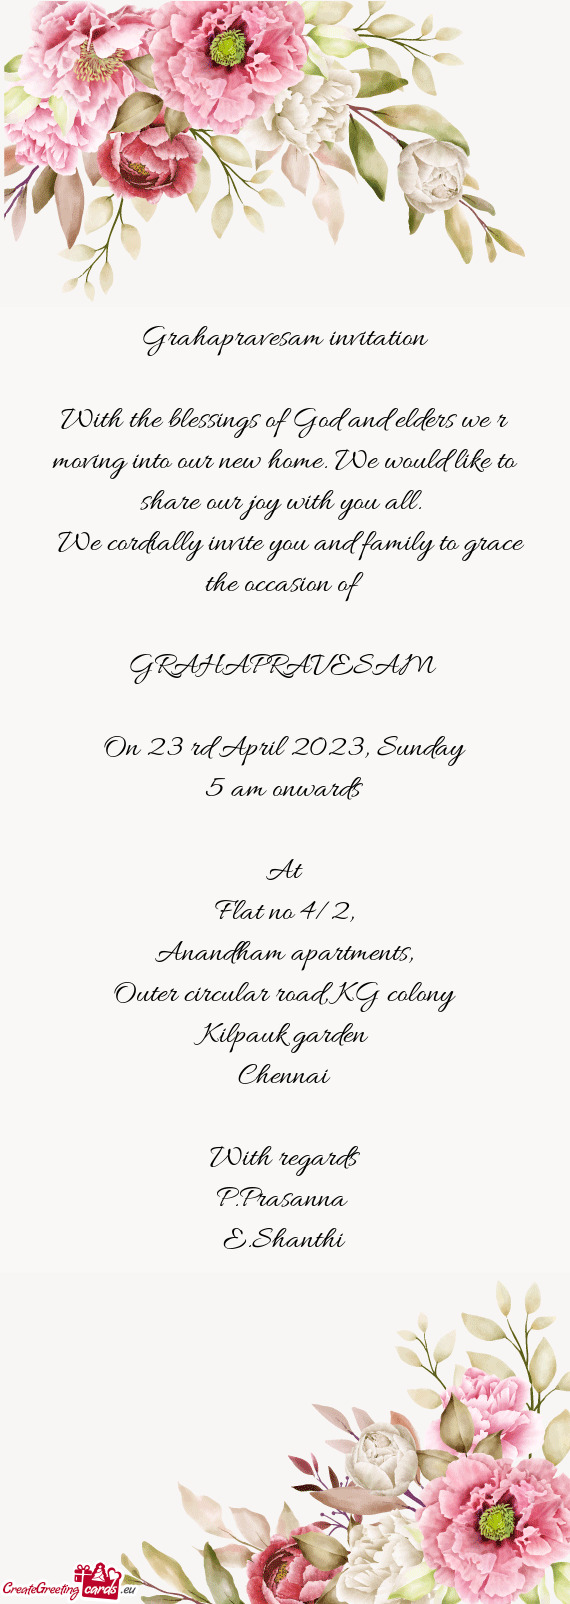 Grahapravesam invitation